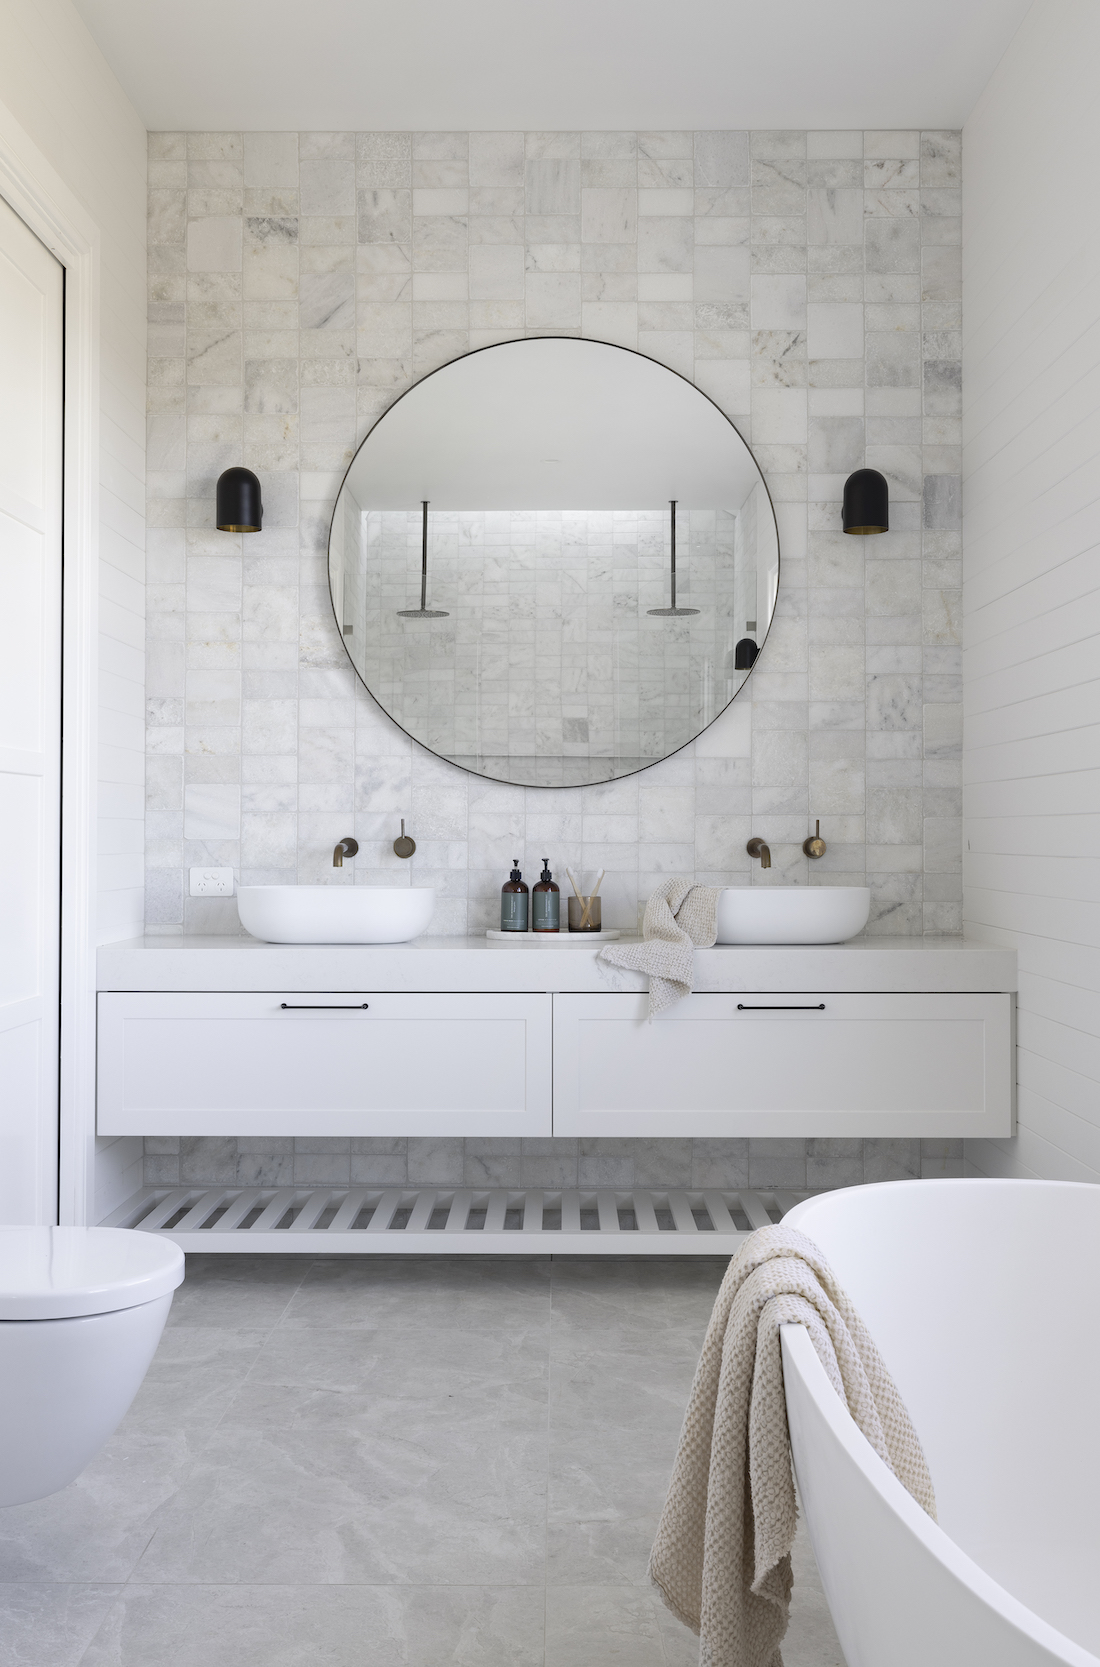 Round mirror in white bathroom with square tiled splashback